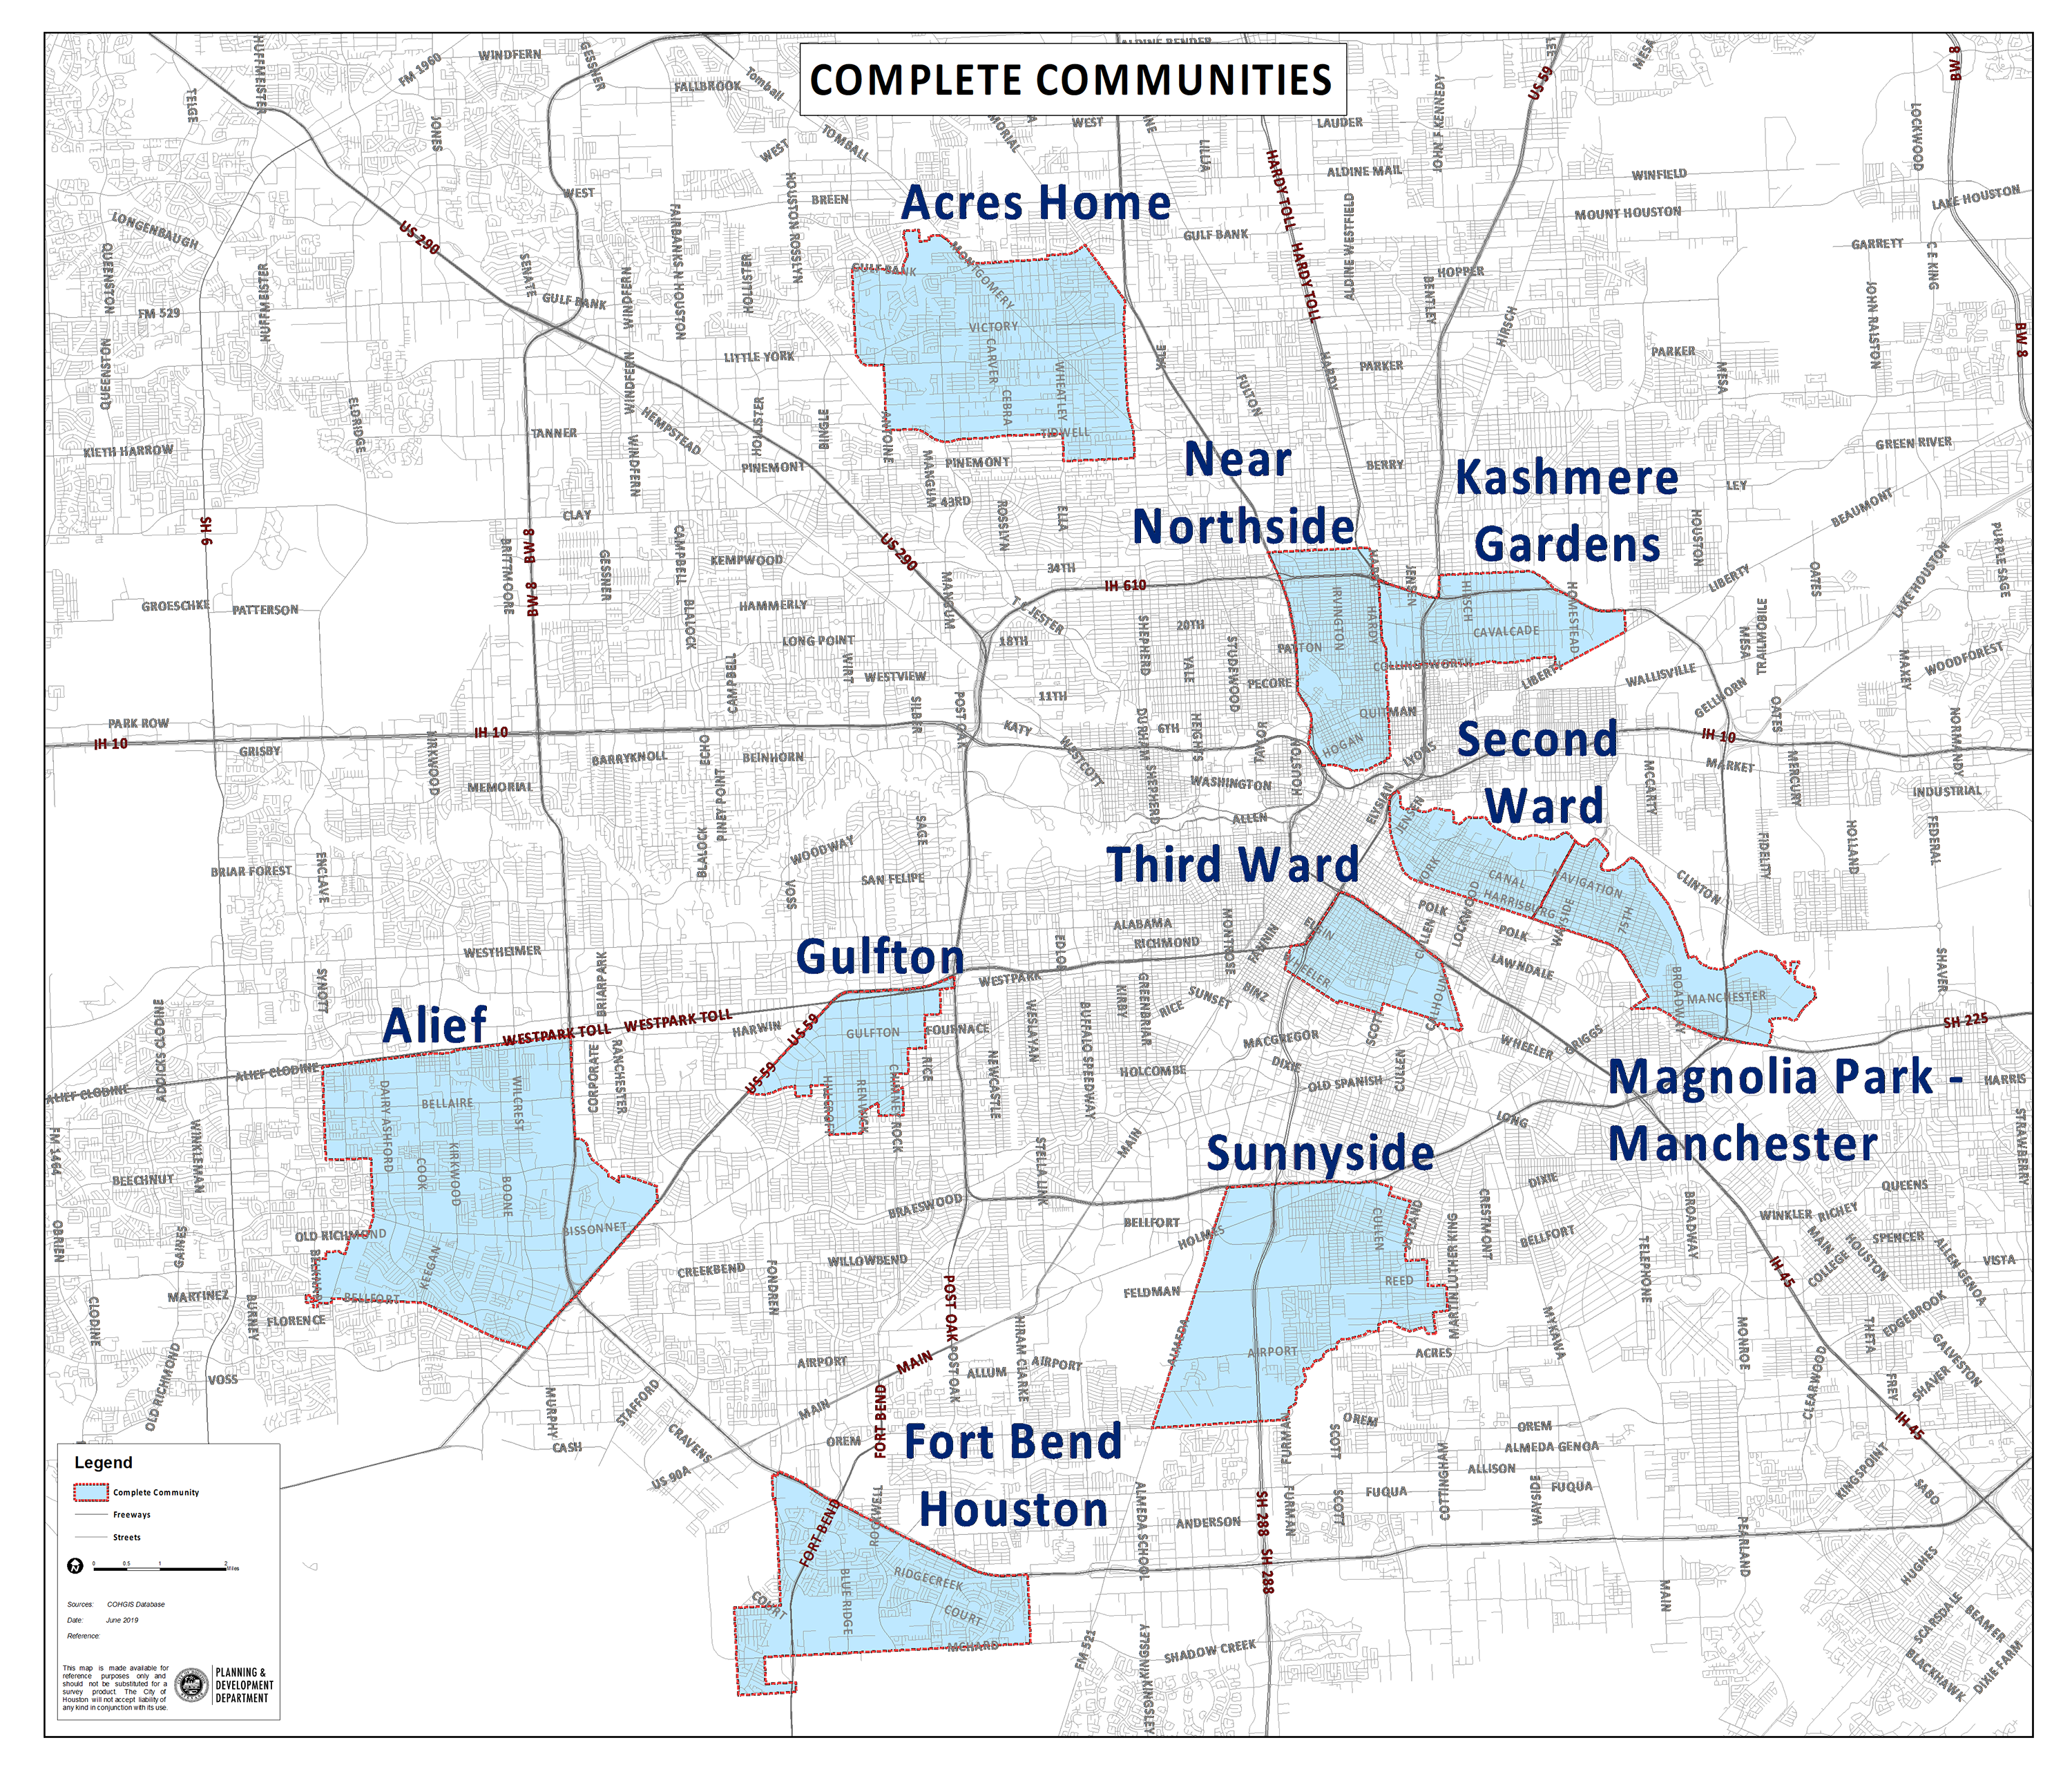 Houston's Complete Communities